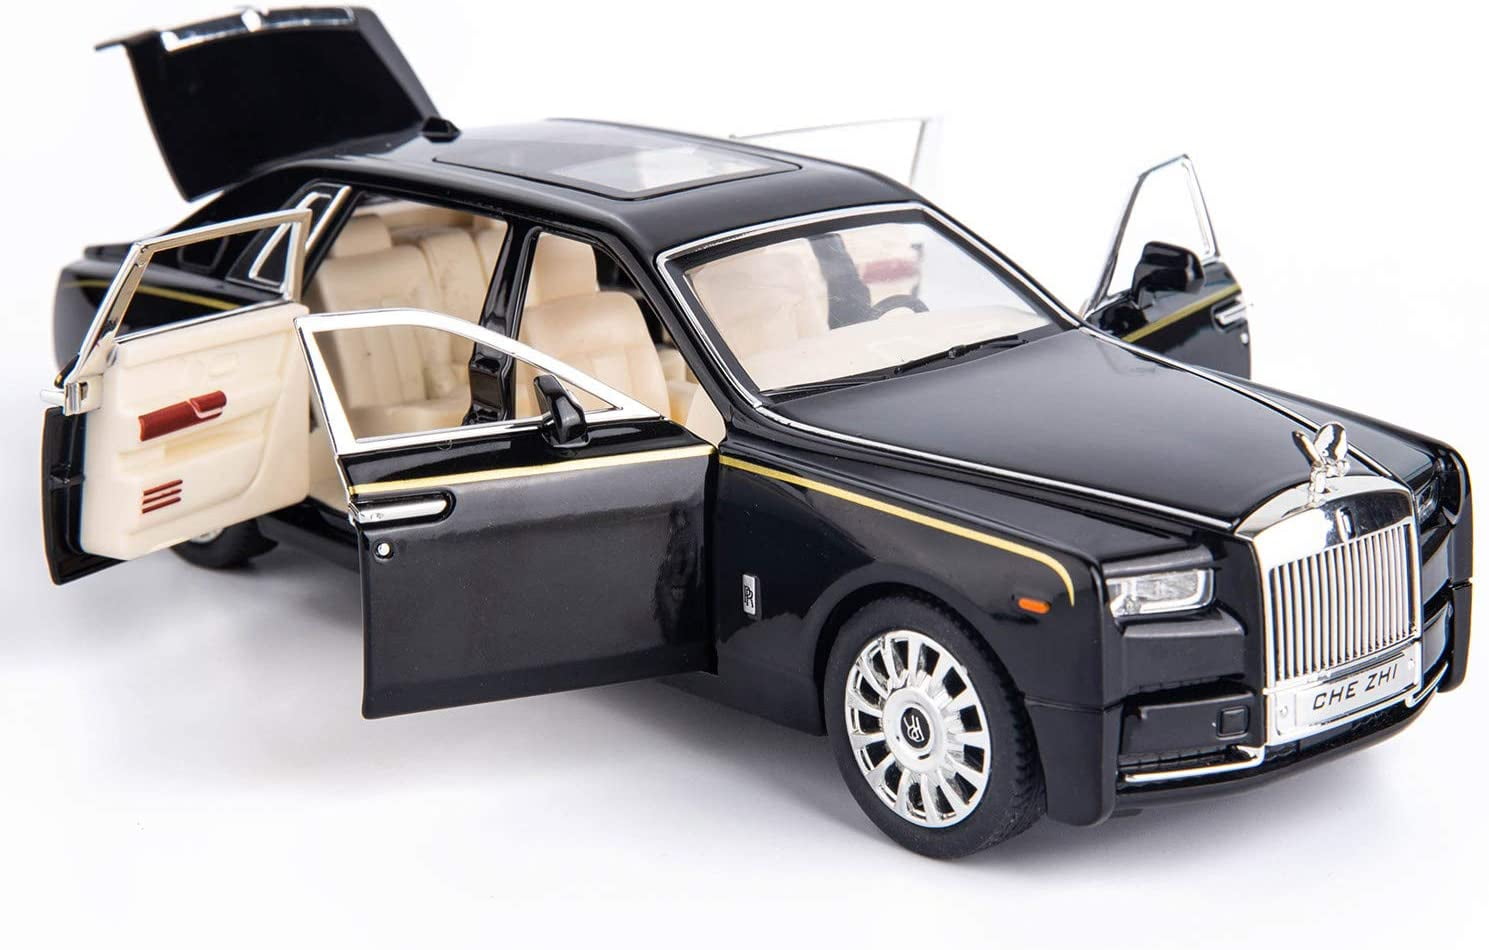 1:24 Rolls Royce Phantom Metal Die cast Model Car Sound Light Pullback Boy Toy